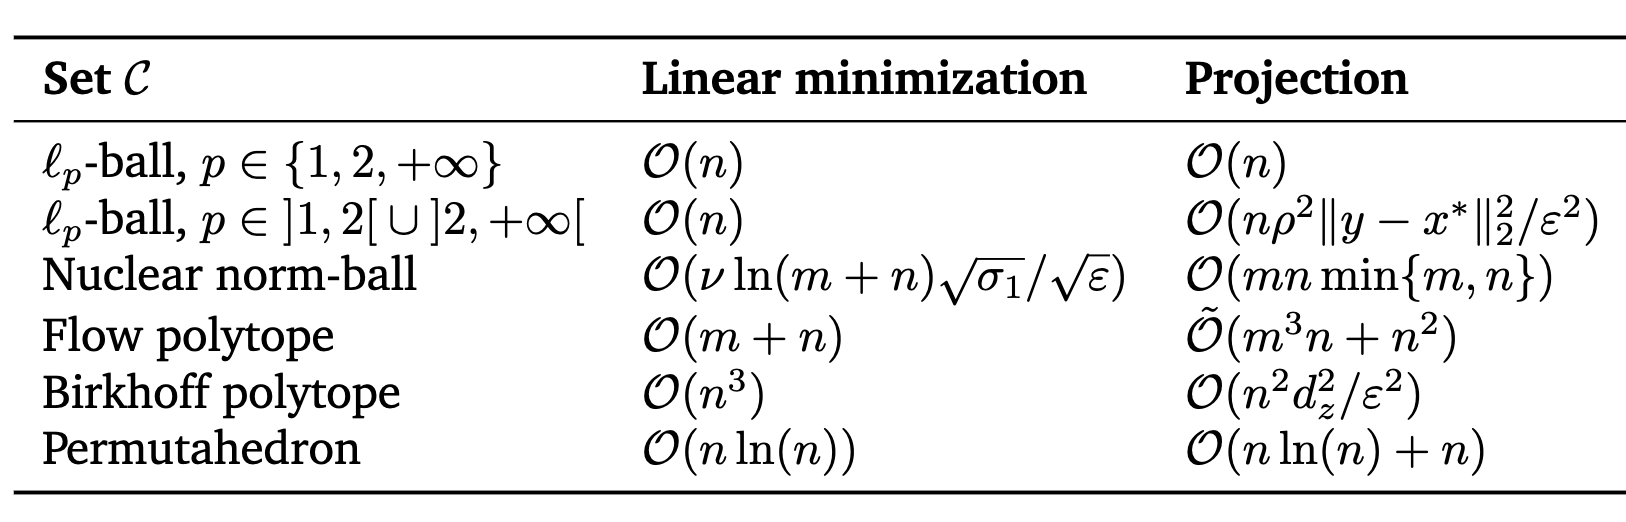 linear minimization